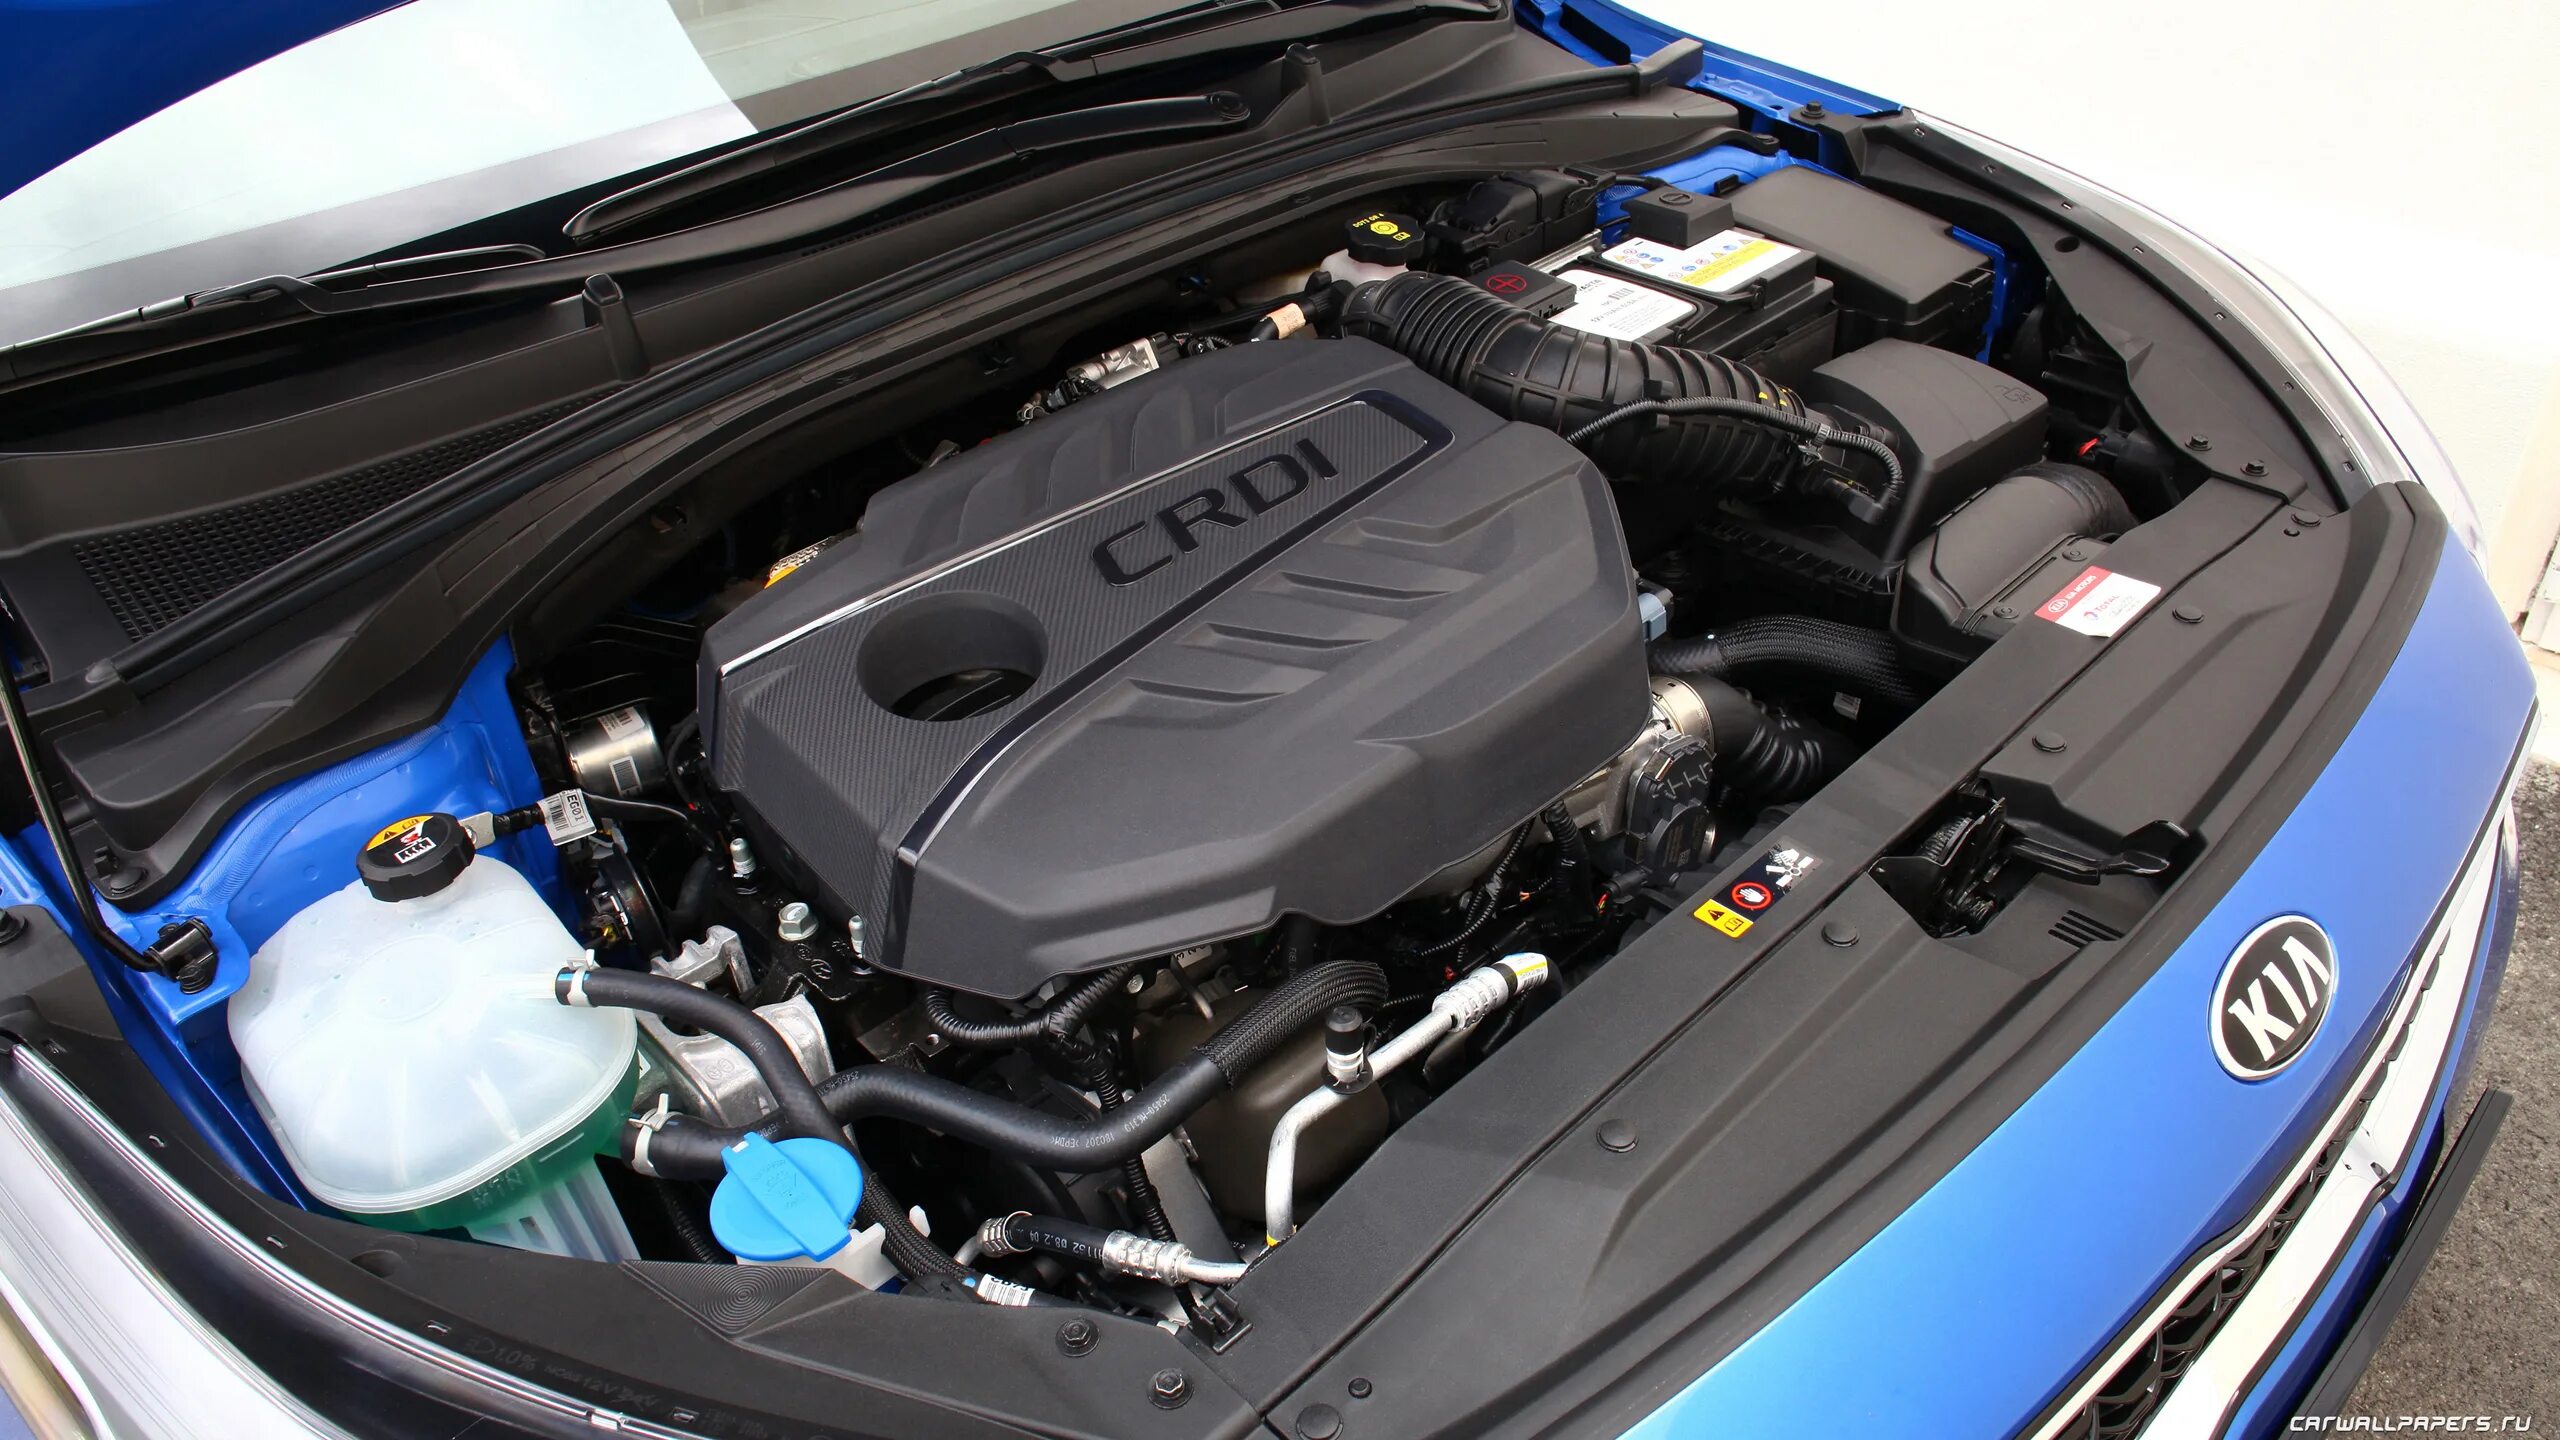 Kia ceed какой двигатель. Моторный отсек Киа СИД 2018. Kia Ceed 2019 1.6 двигатель. Двигатель кия СИД 1.6. Kia Ceed моторный отсек.